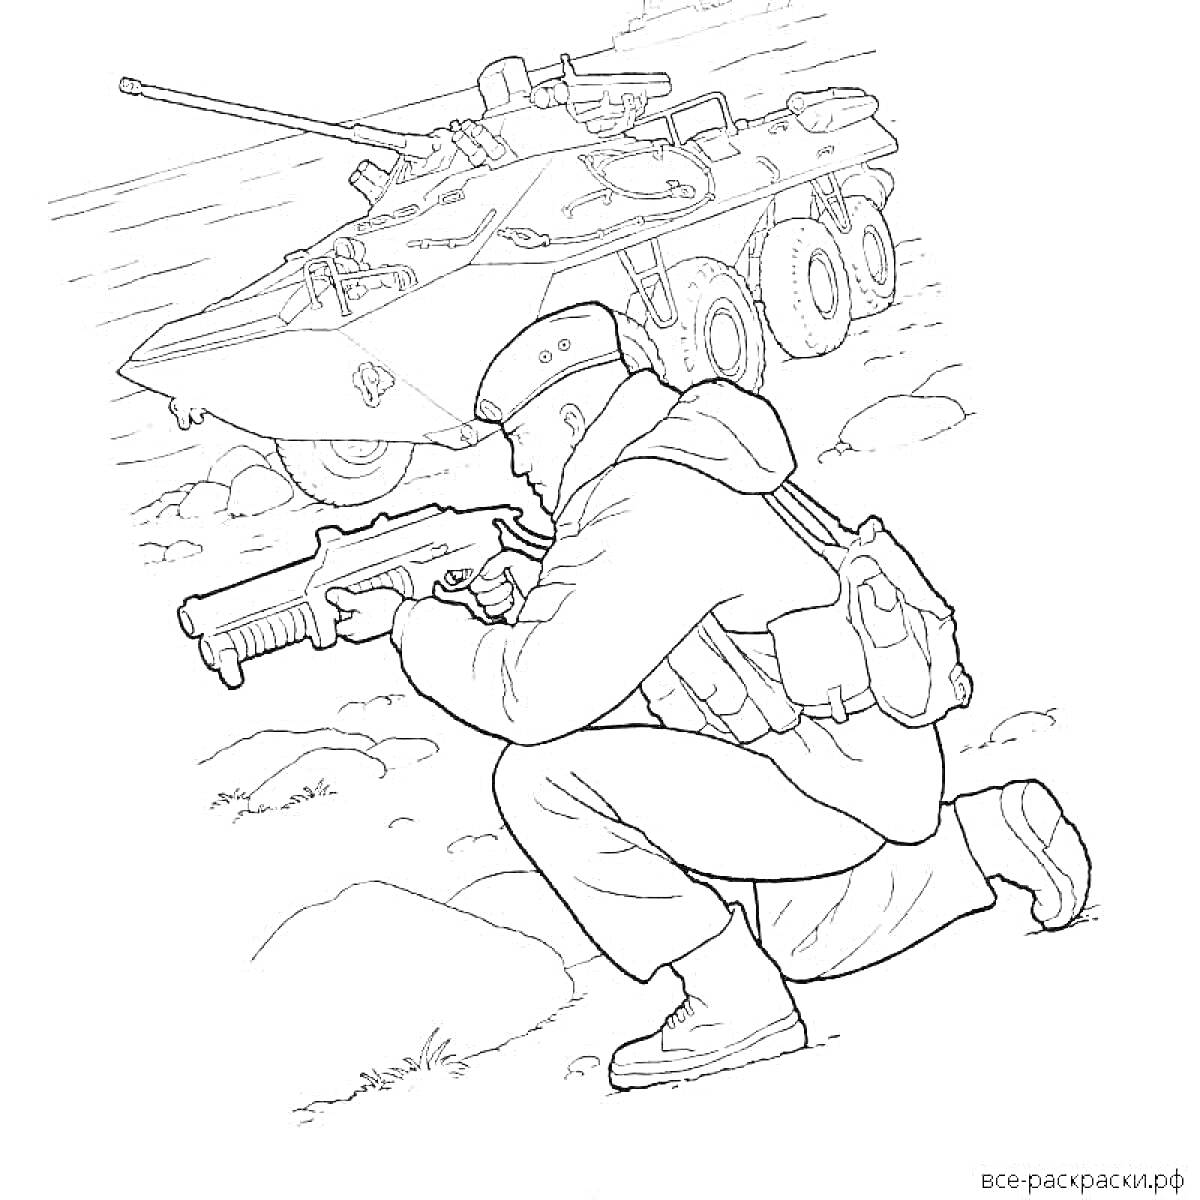 Солдат с гранатомётом на фоне бронетранспортёра